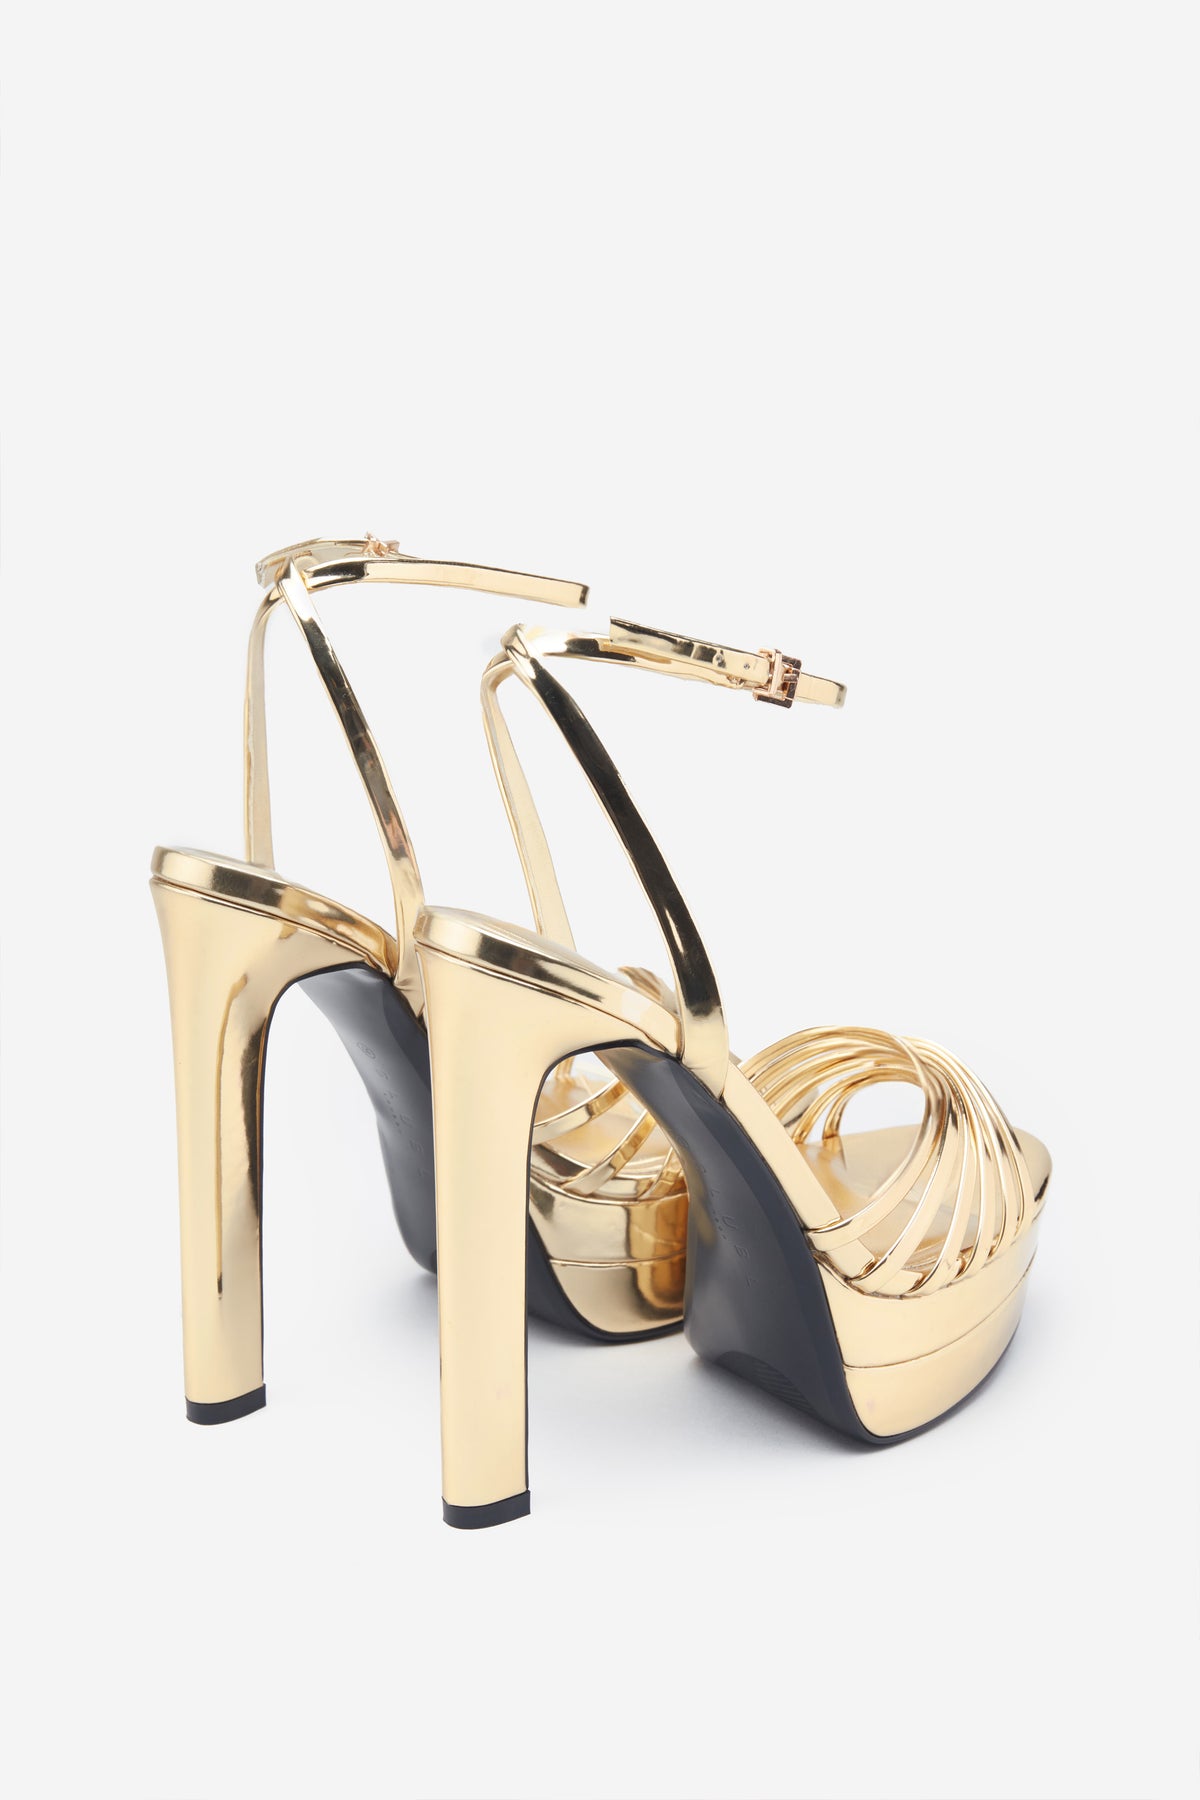 Shoes Woman Pumps Champagne Gold High Heels Stiletto 11 Cm Wedding Shoes  Women Heels Dress Shoes-gold,41 : Amazon.co.uk: Fashion